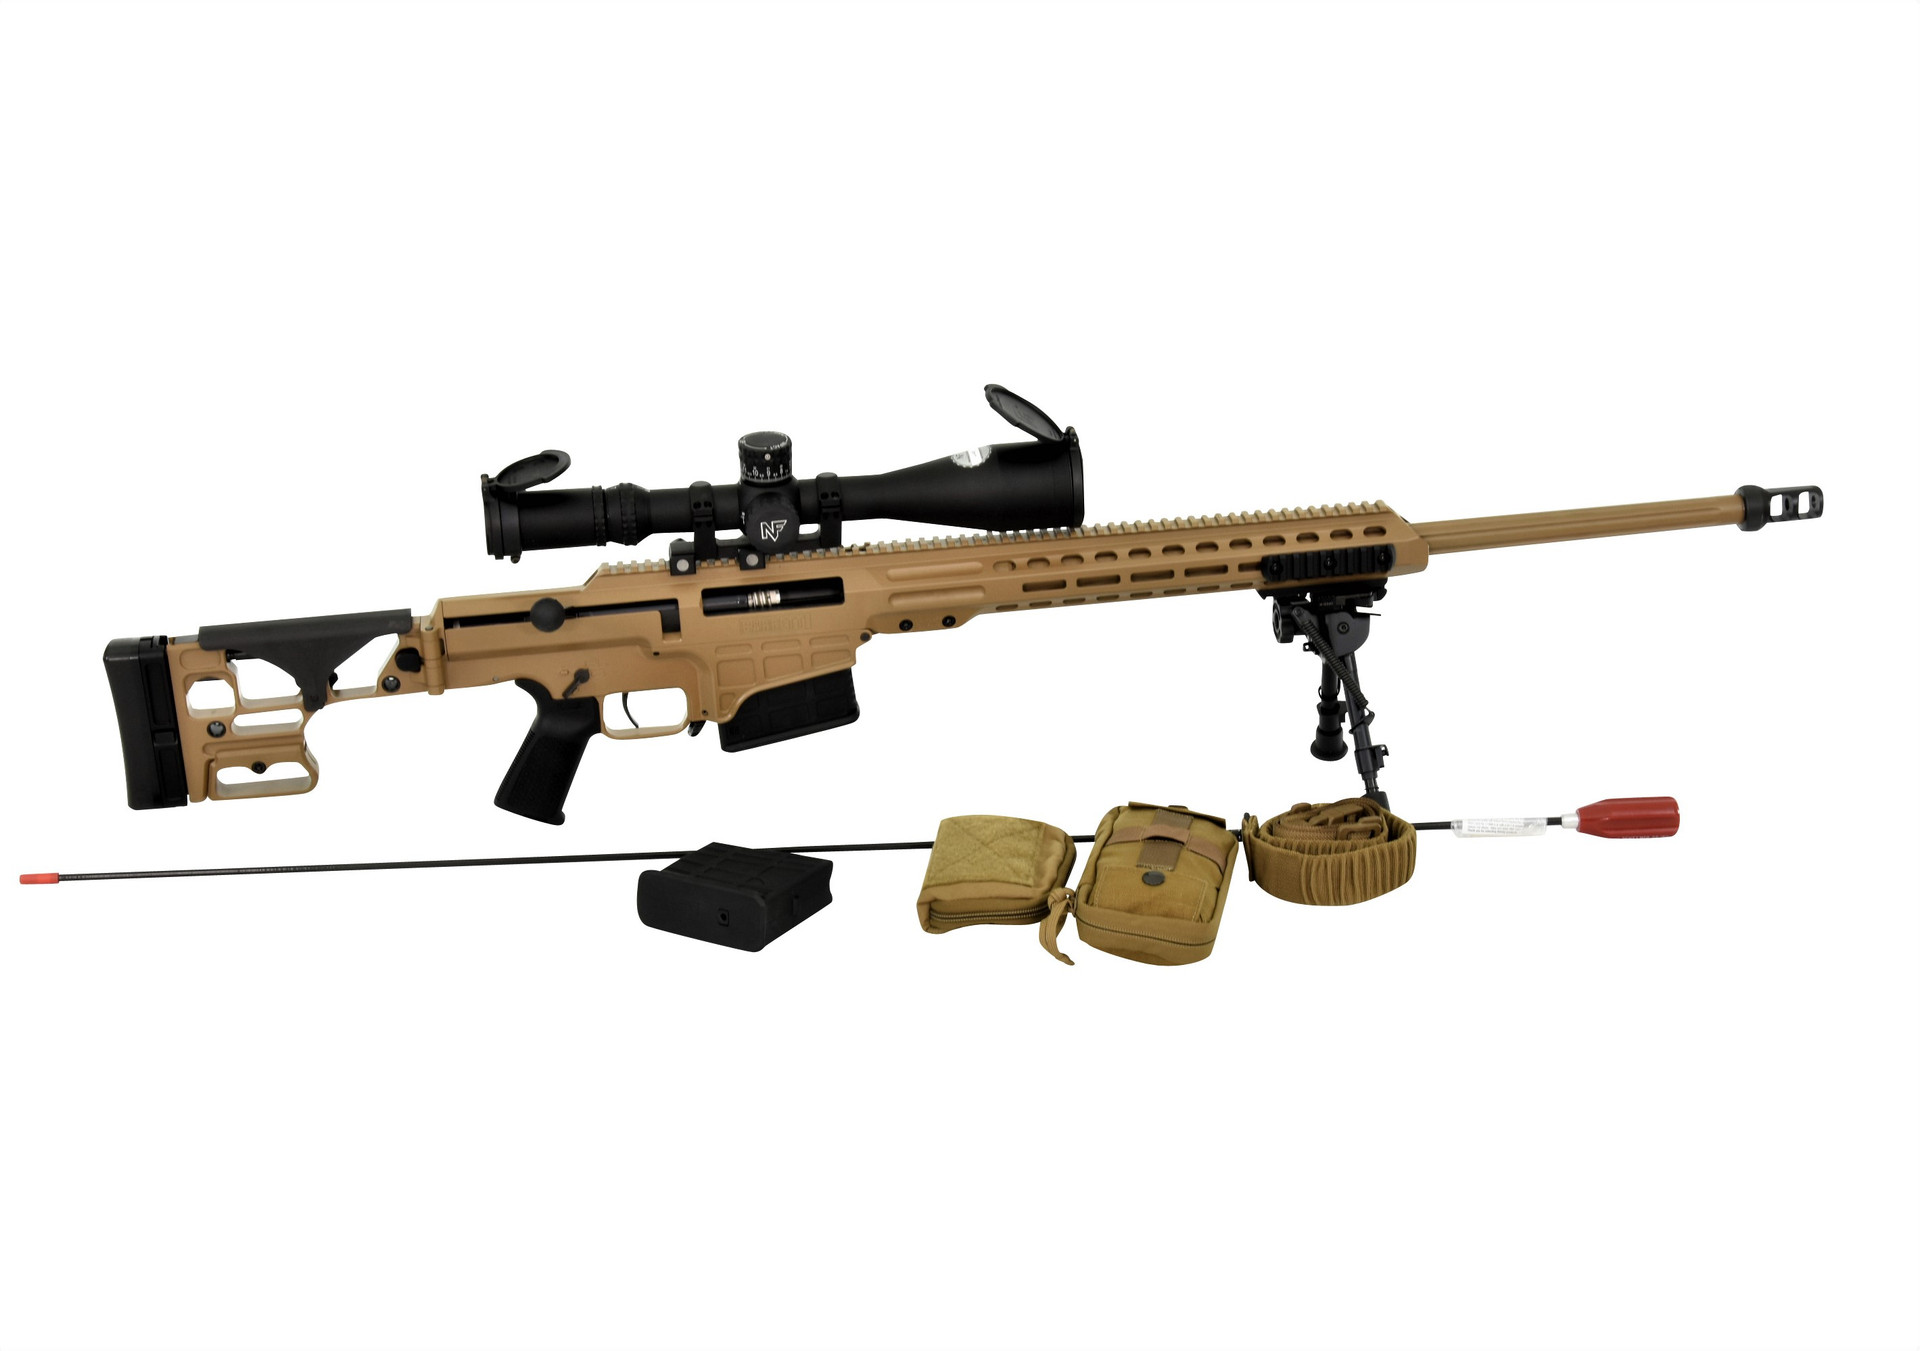 MK22 Advanced Sniper Rifle